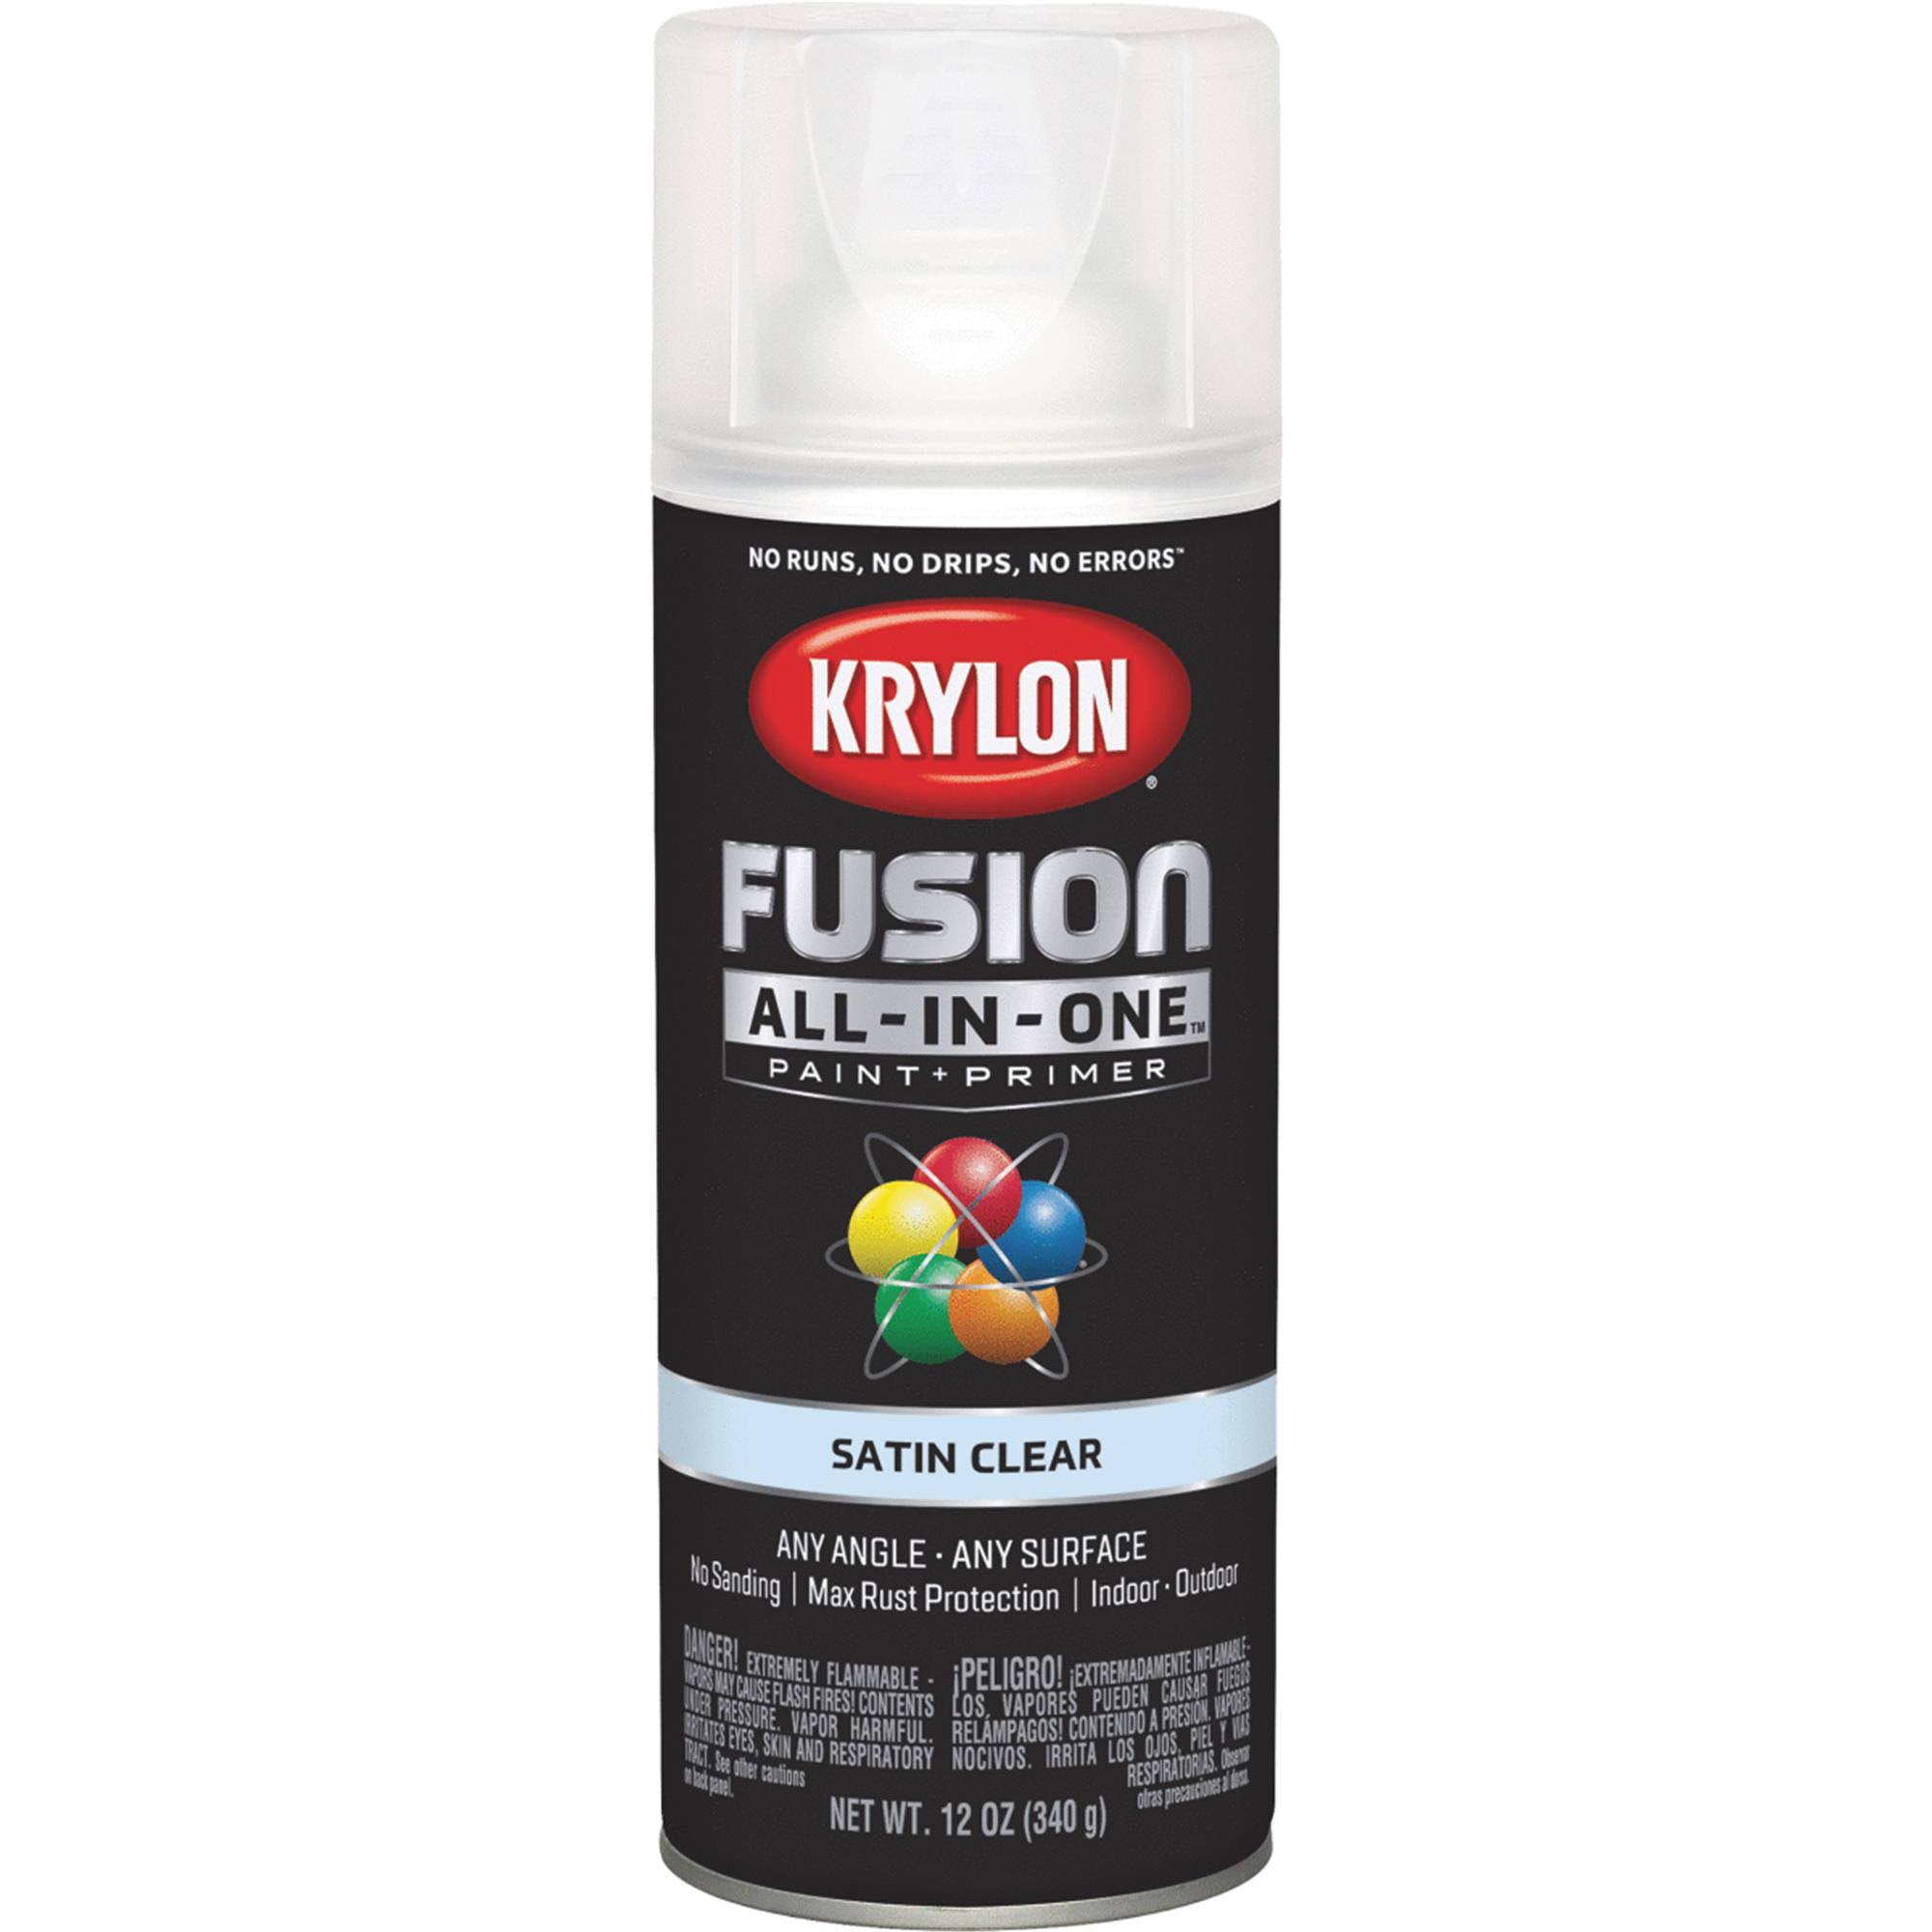 Krylon K02735007 Fusion All-in-One Paint & Primer Spray, Satin Clear, 12 oz